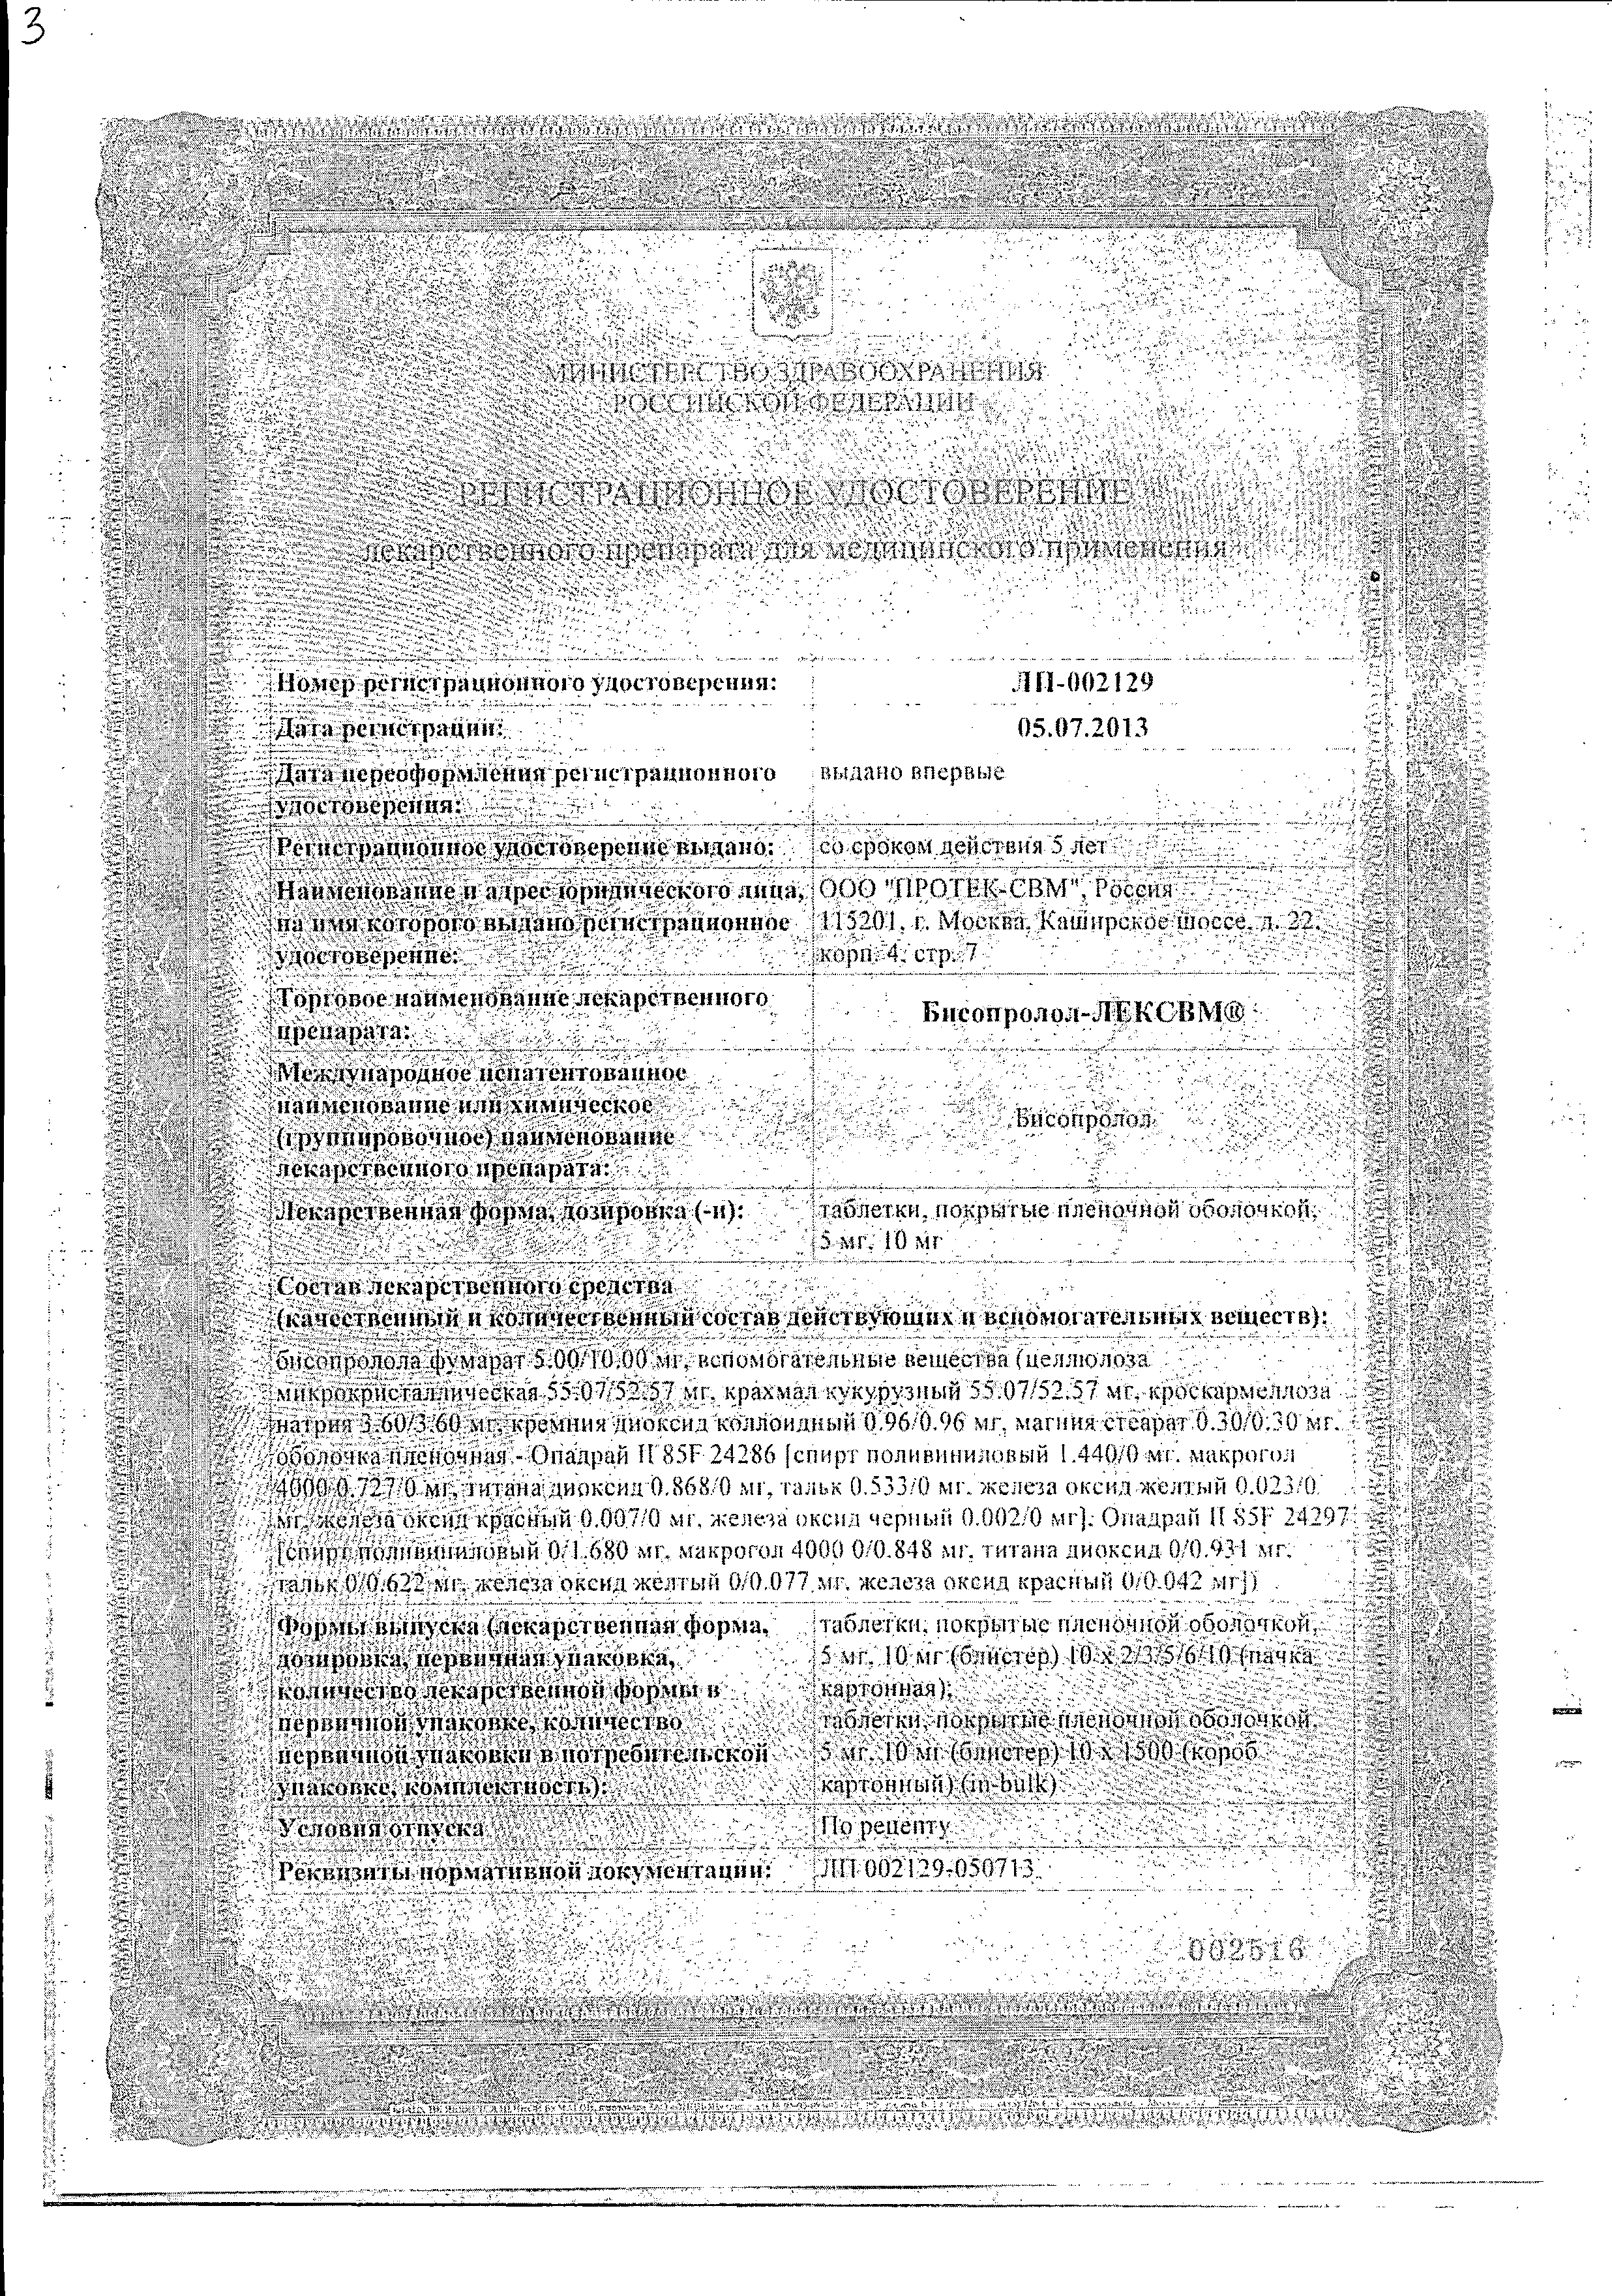 Бисопролол-ЛЕКСВМ сертификат